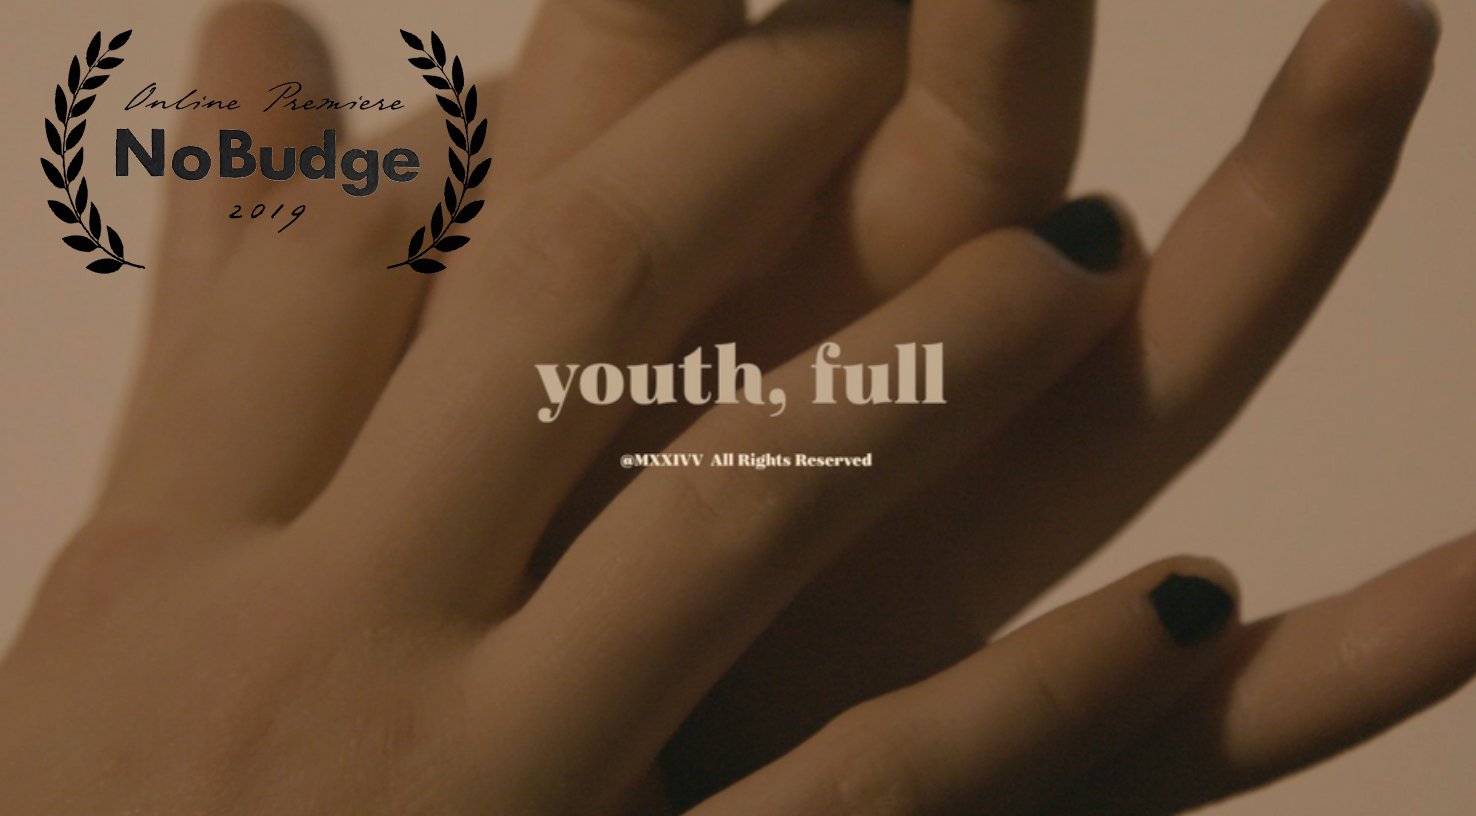 youth, full (2019)